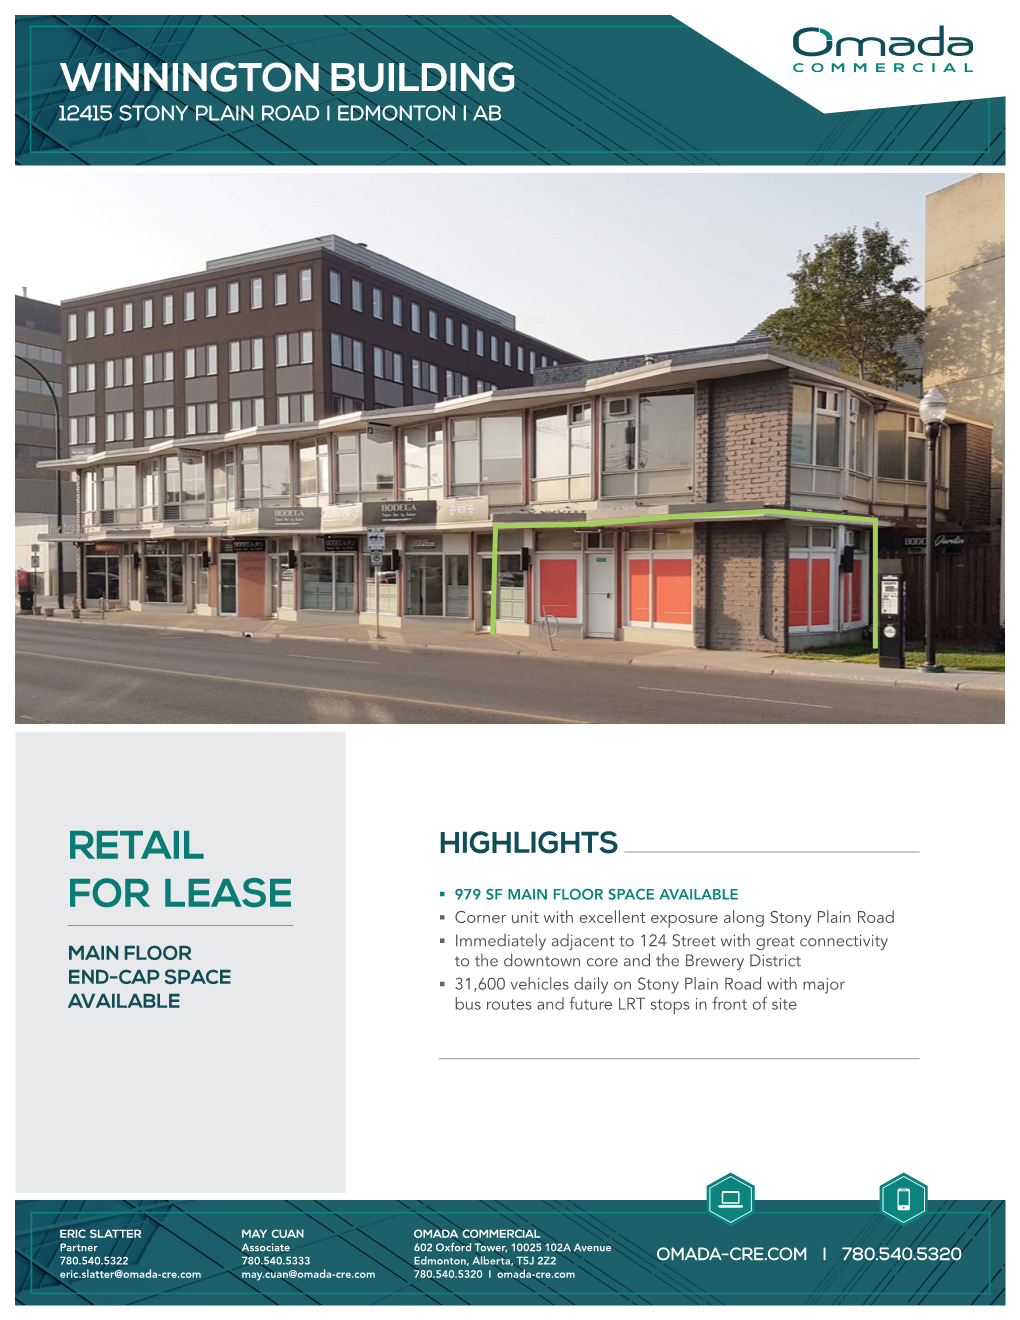 Winnington Building Retail for Lease